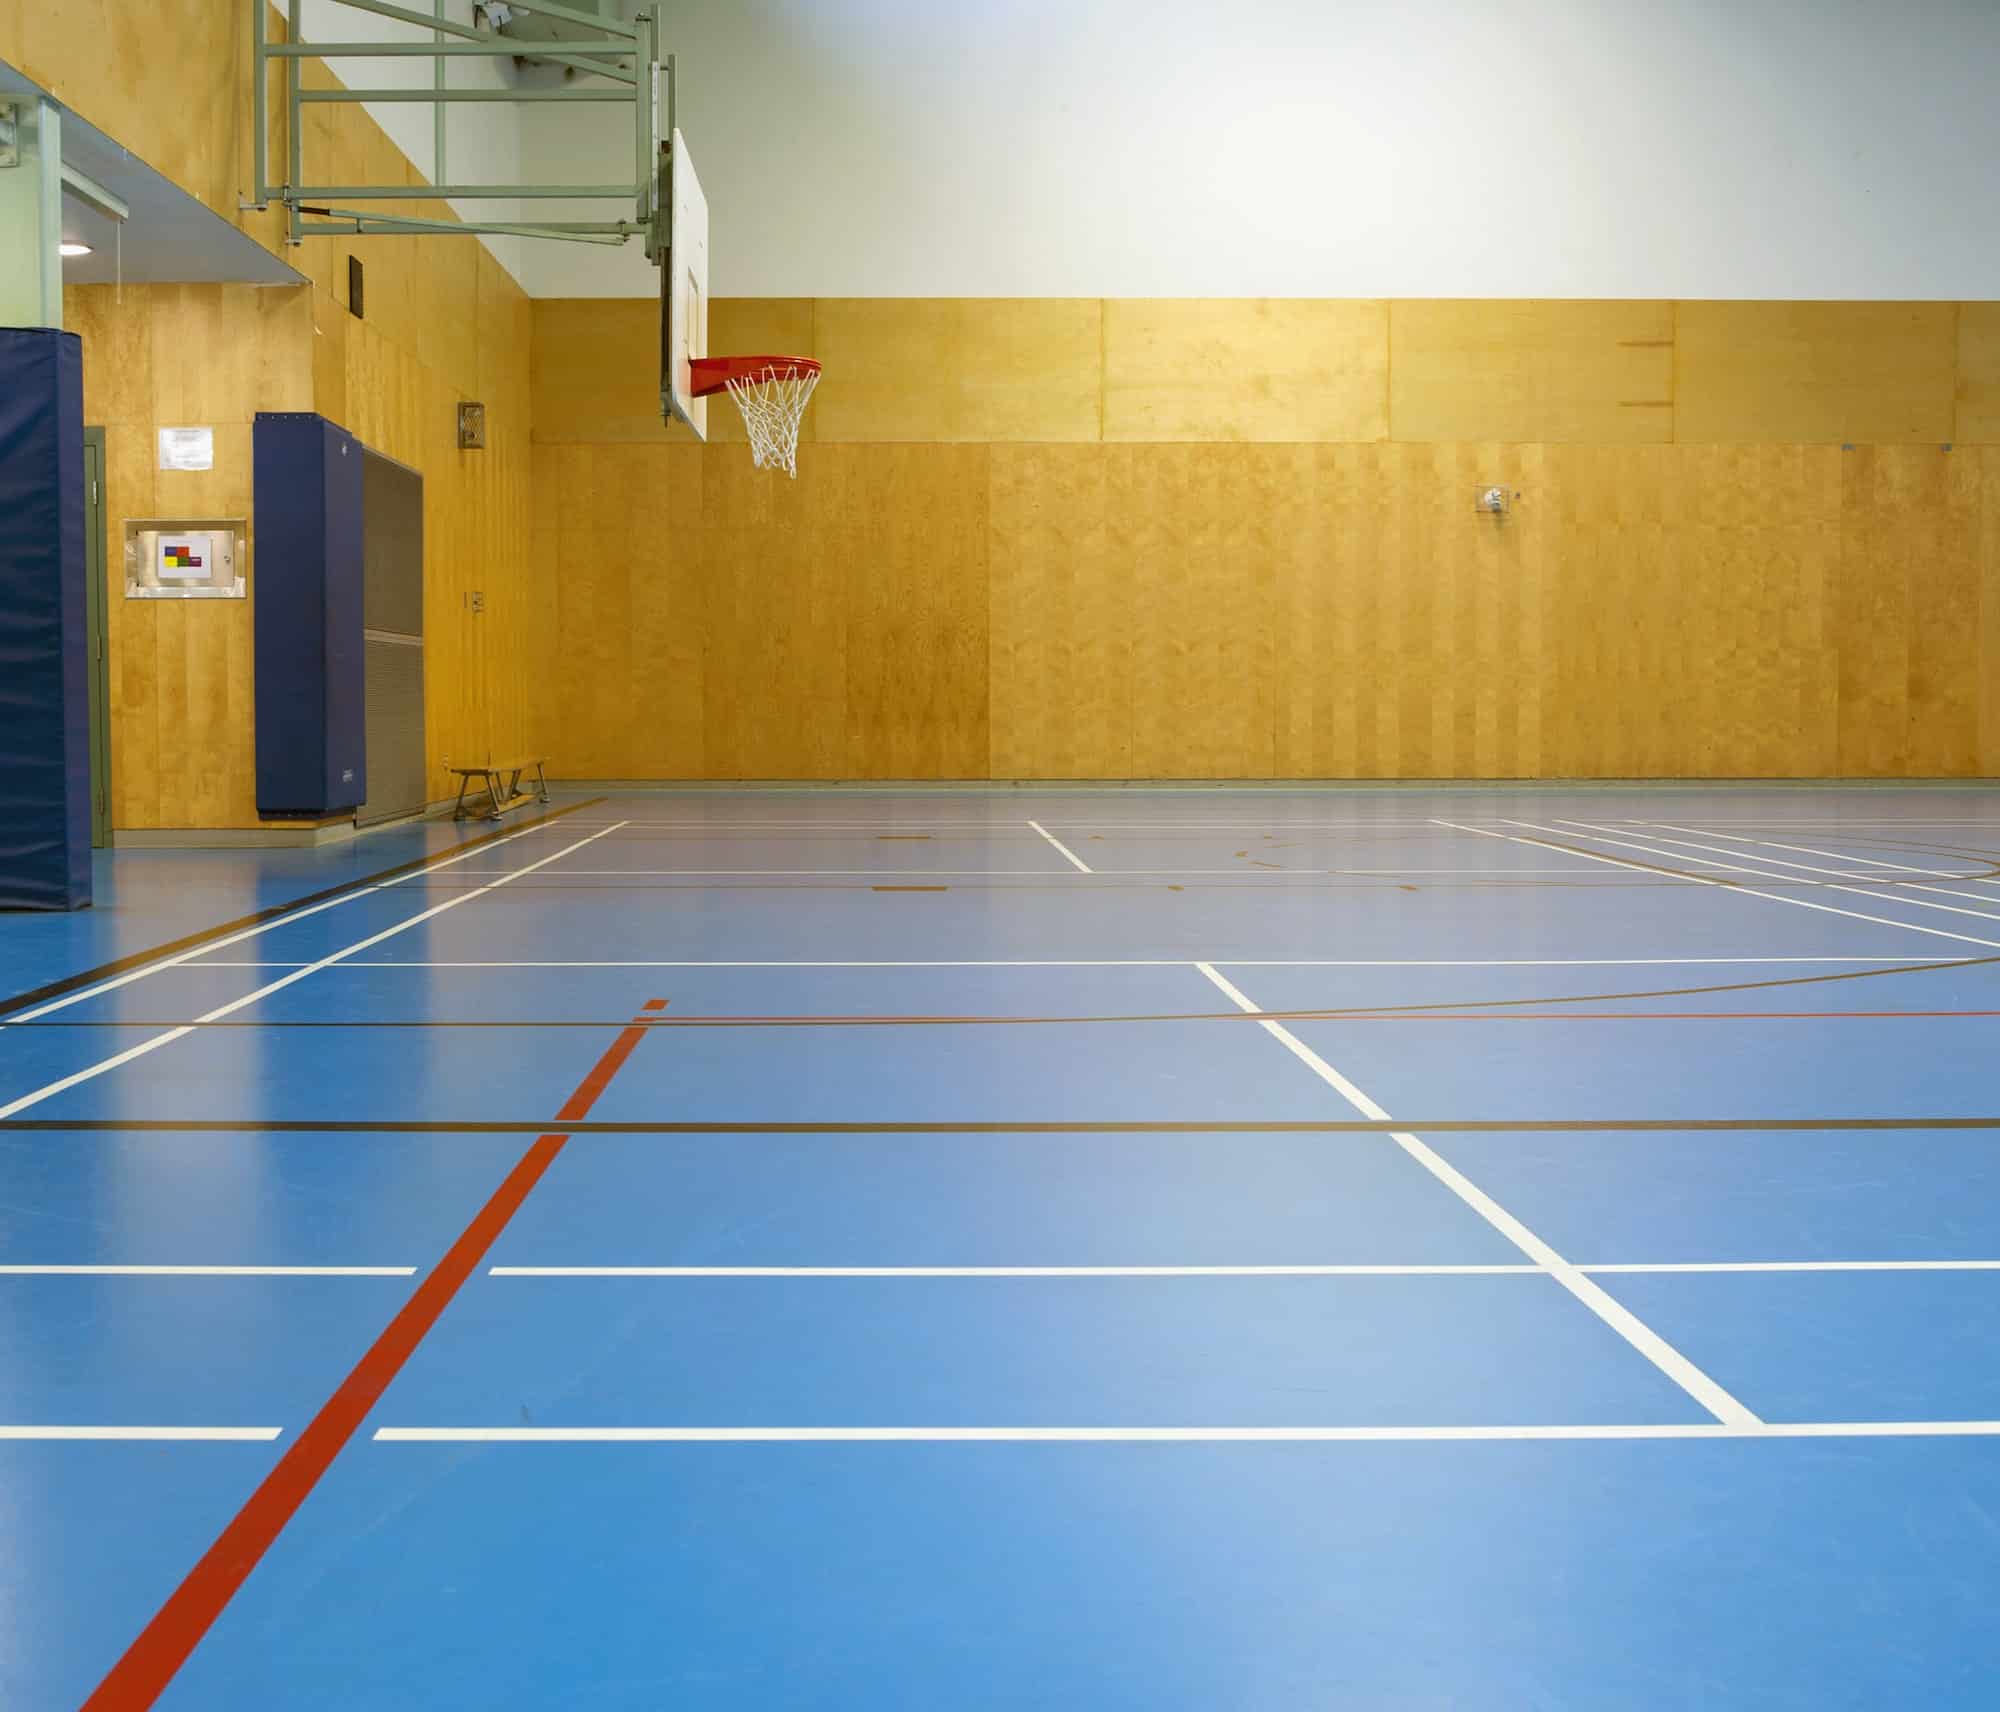 Gymnasium and basketball court, large empty gym.